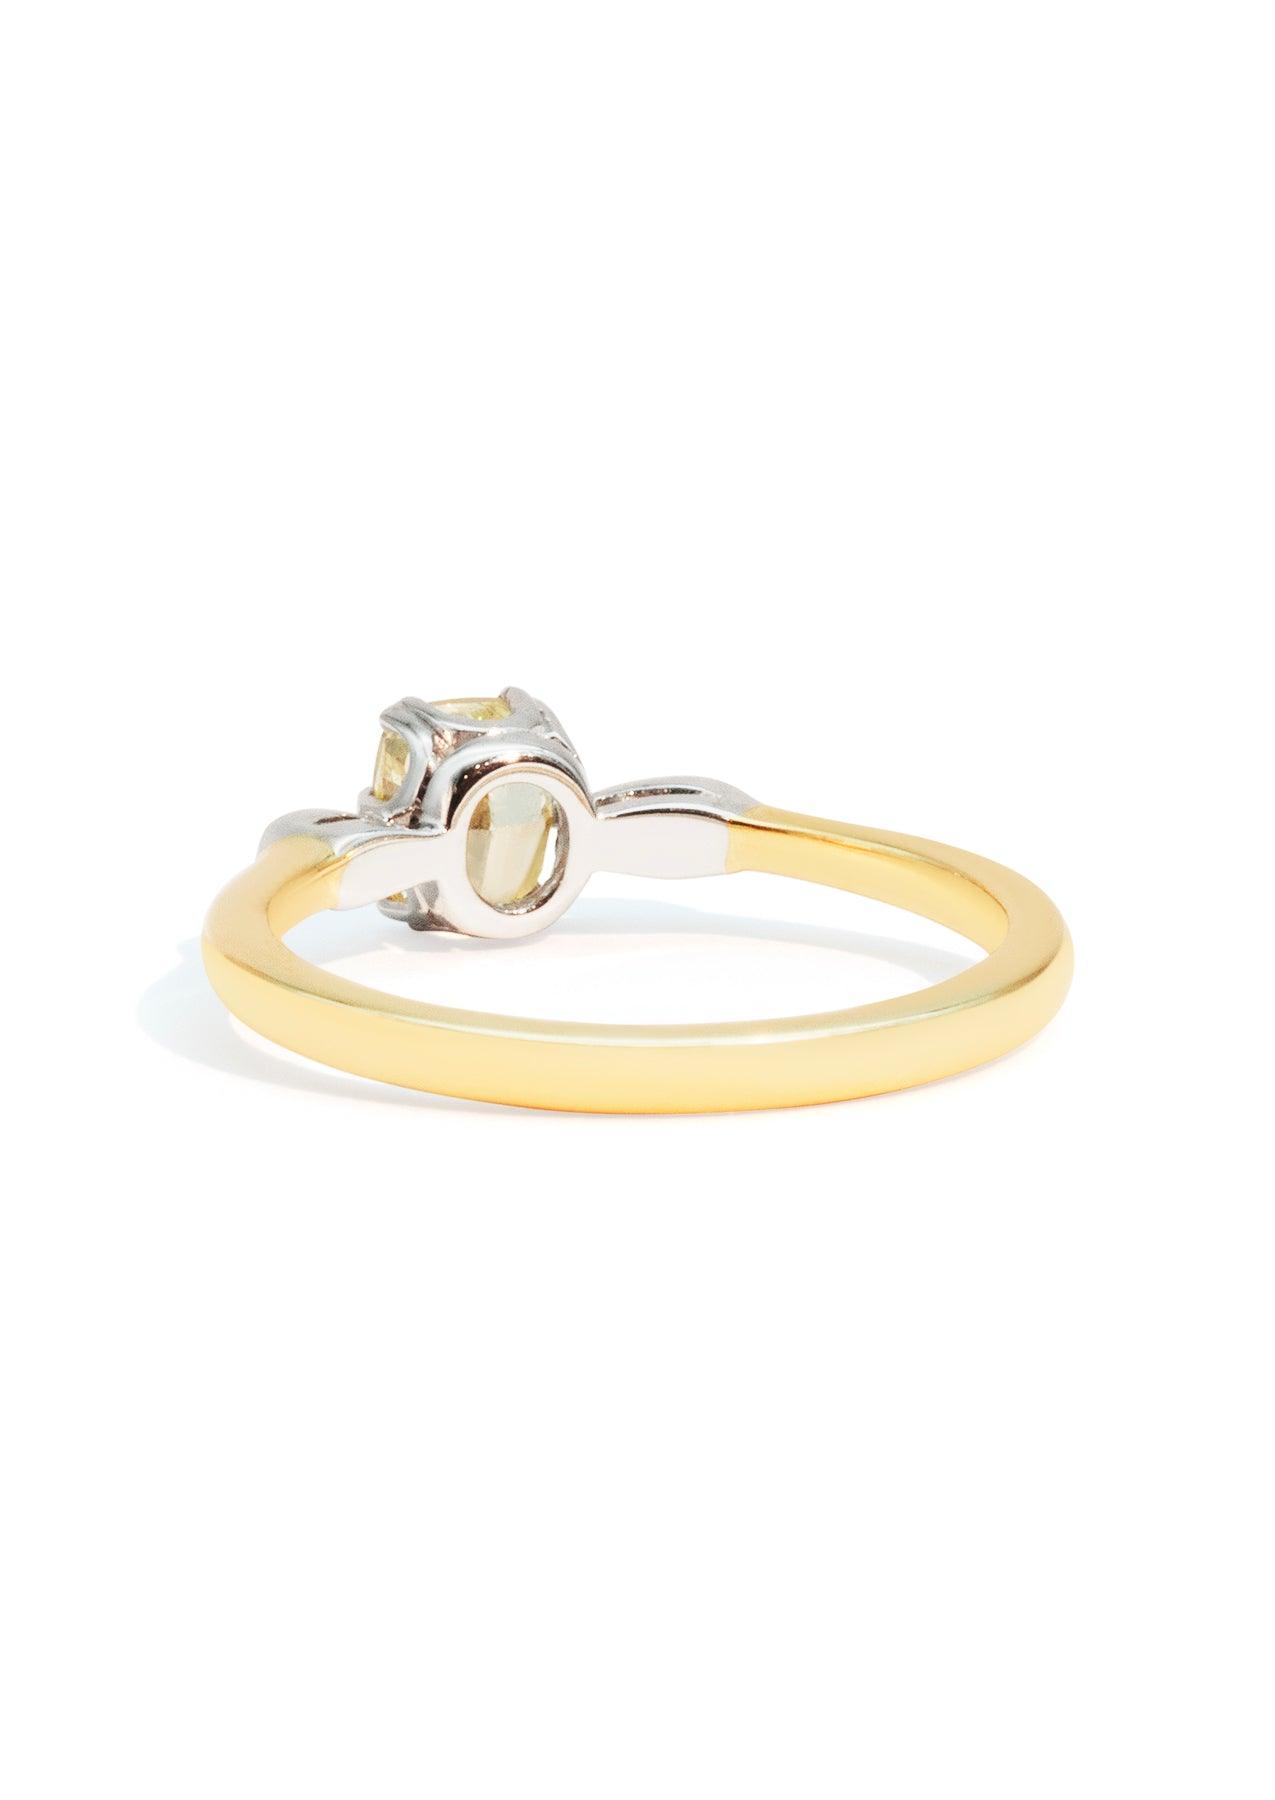 The Penelope 0.73ct Yellow Diamond Ring